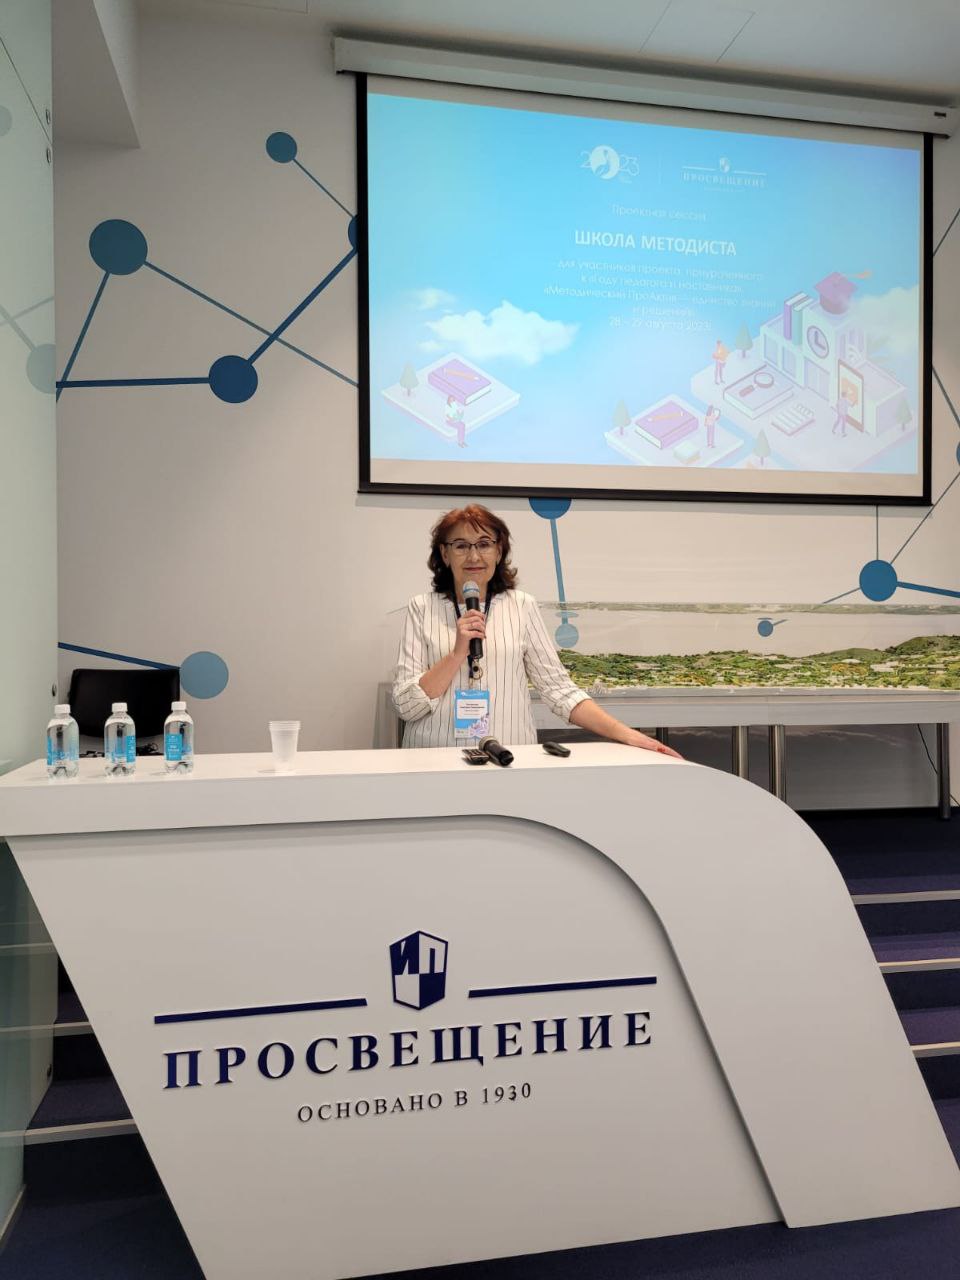 Гостюхина Светлана Николаевна приняла участие в проектной сессии &amp;quot;Школа методиста&amp;quot; в г. Москва.